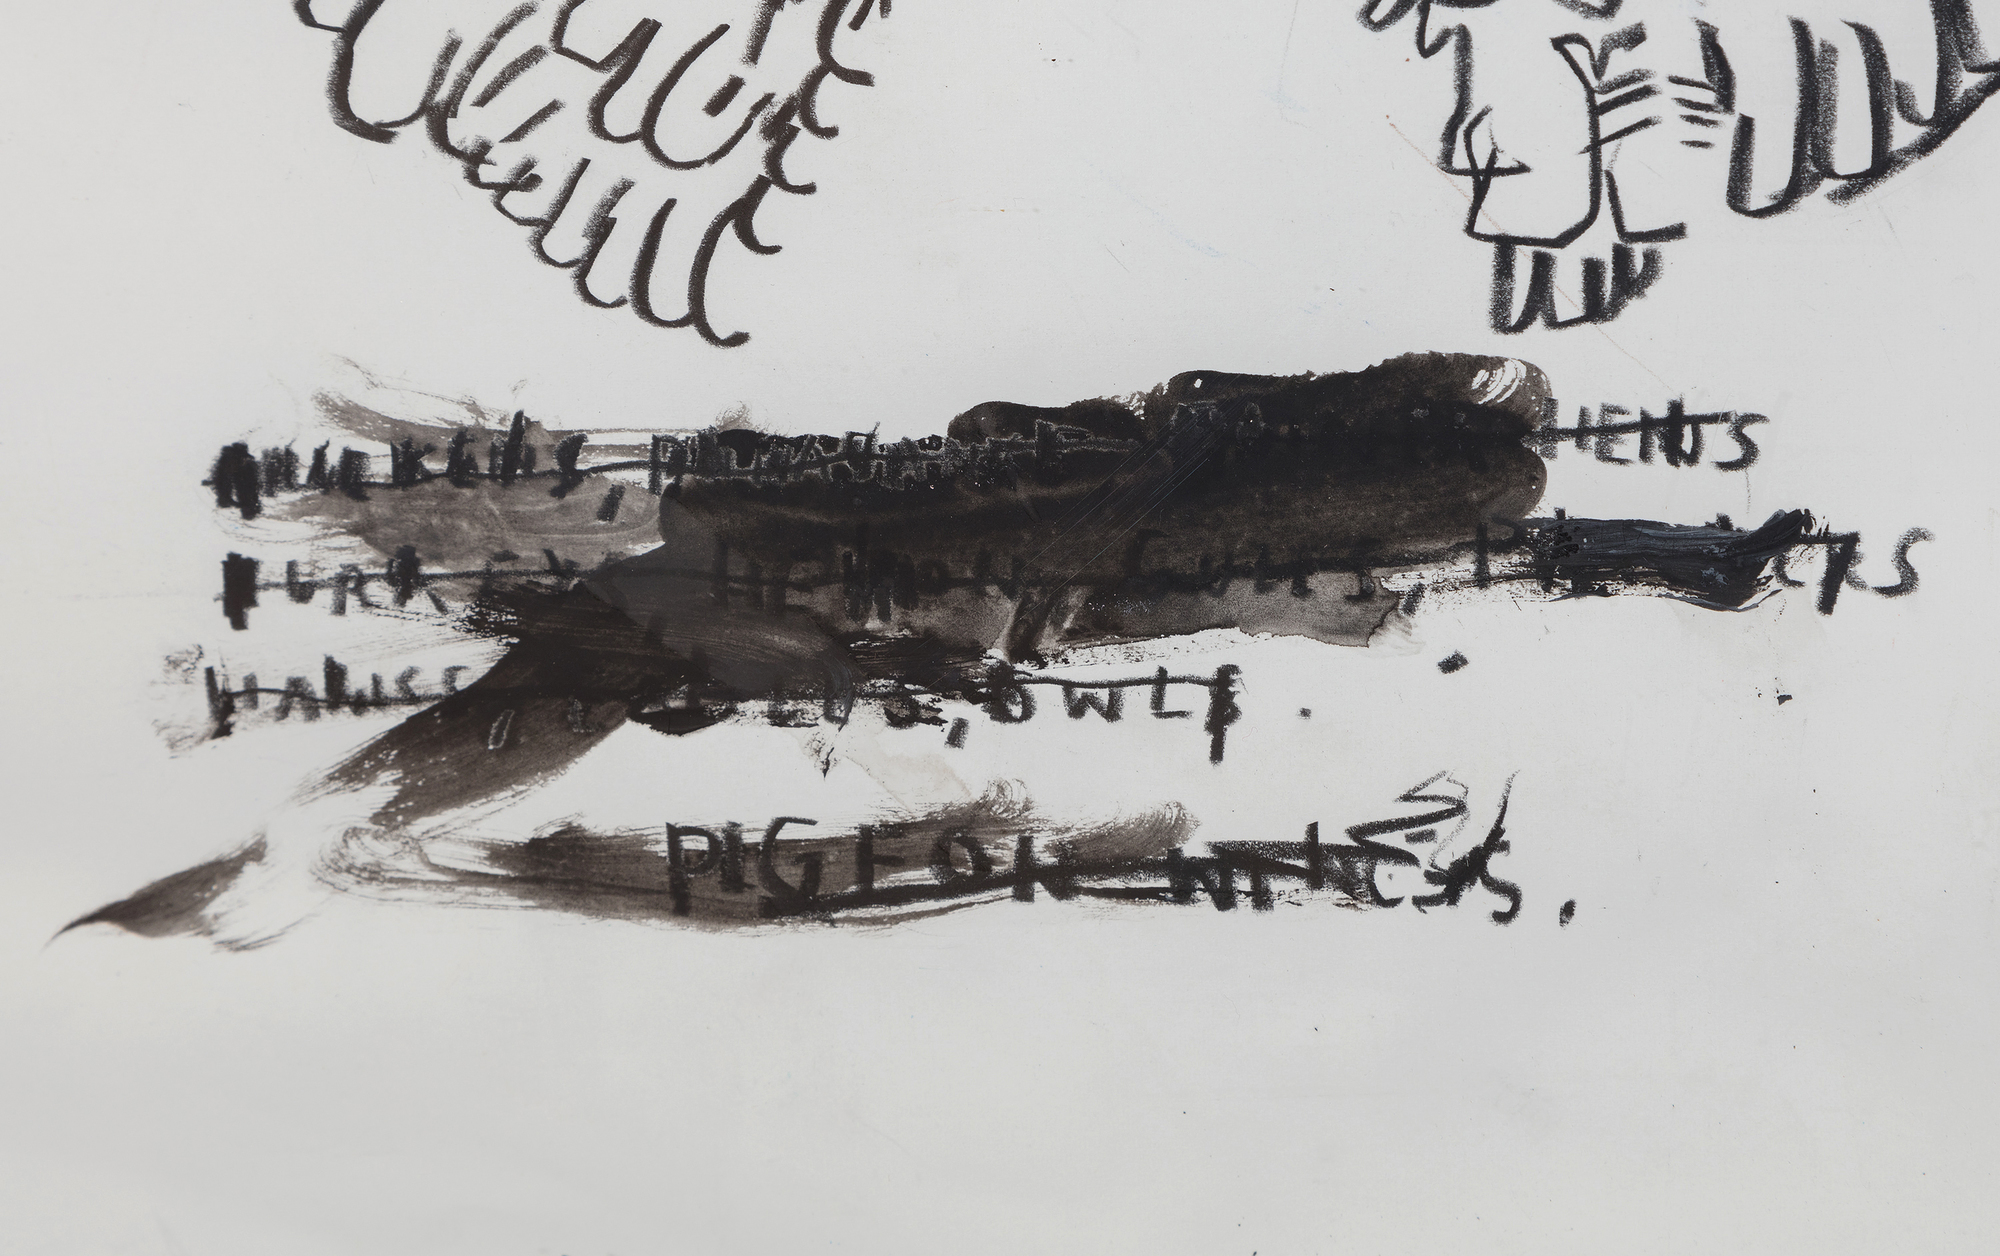 JEAN-MICHEL BASQUIAT - 《无题（鸽子解剖）》 - 油画、石墨和粉笔在纸上 - 22 x 30 英寸。